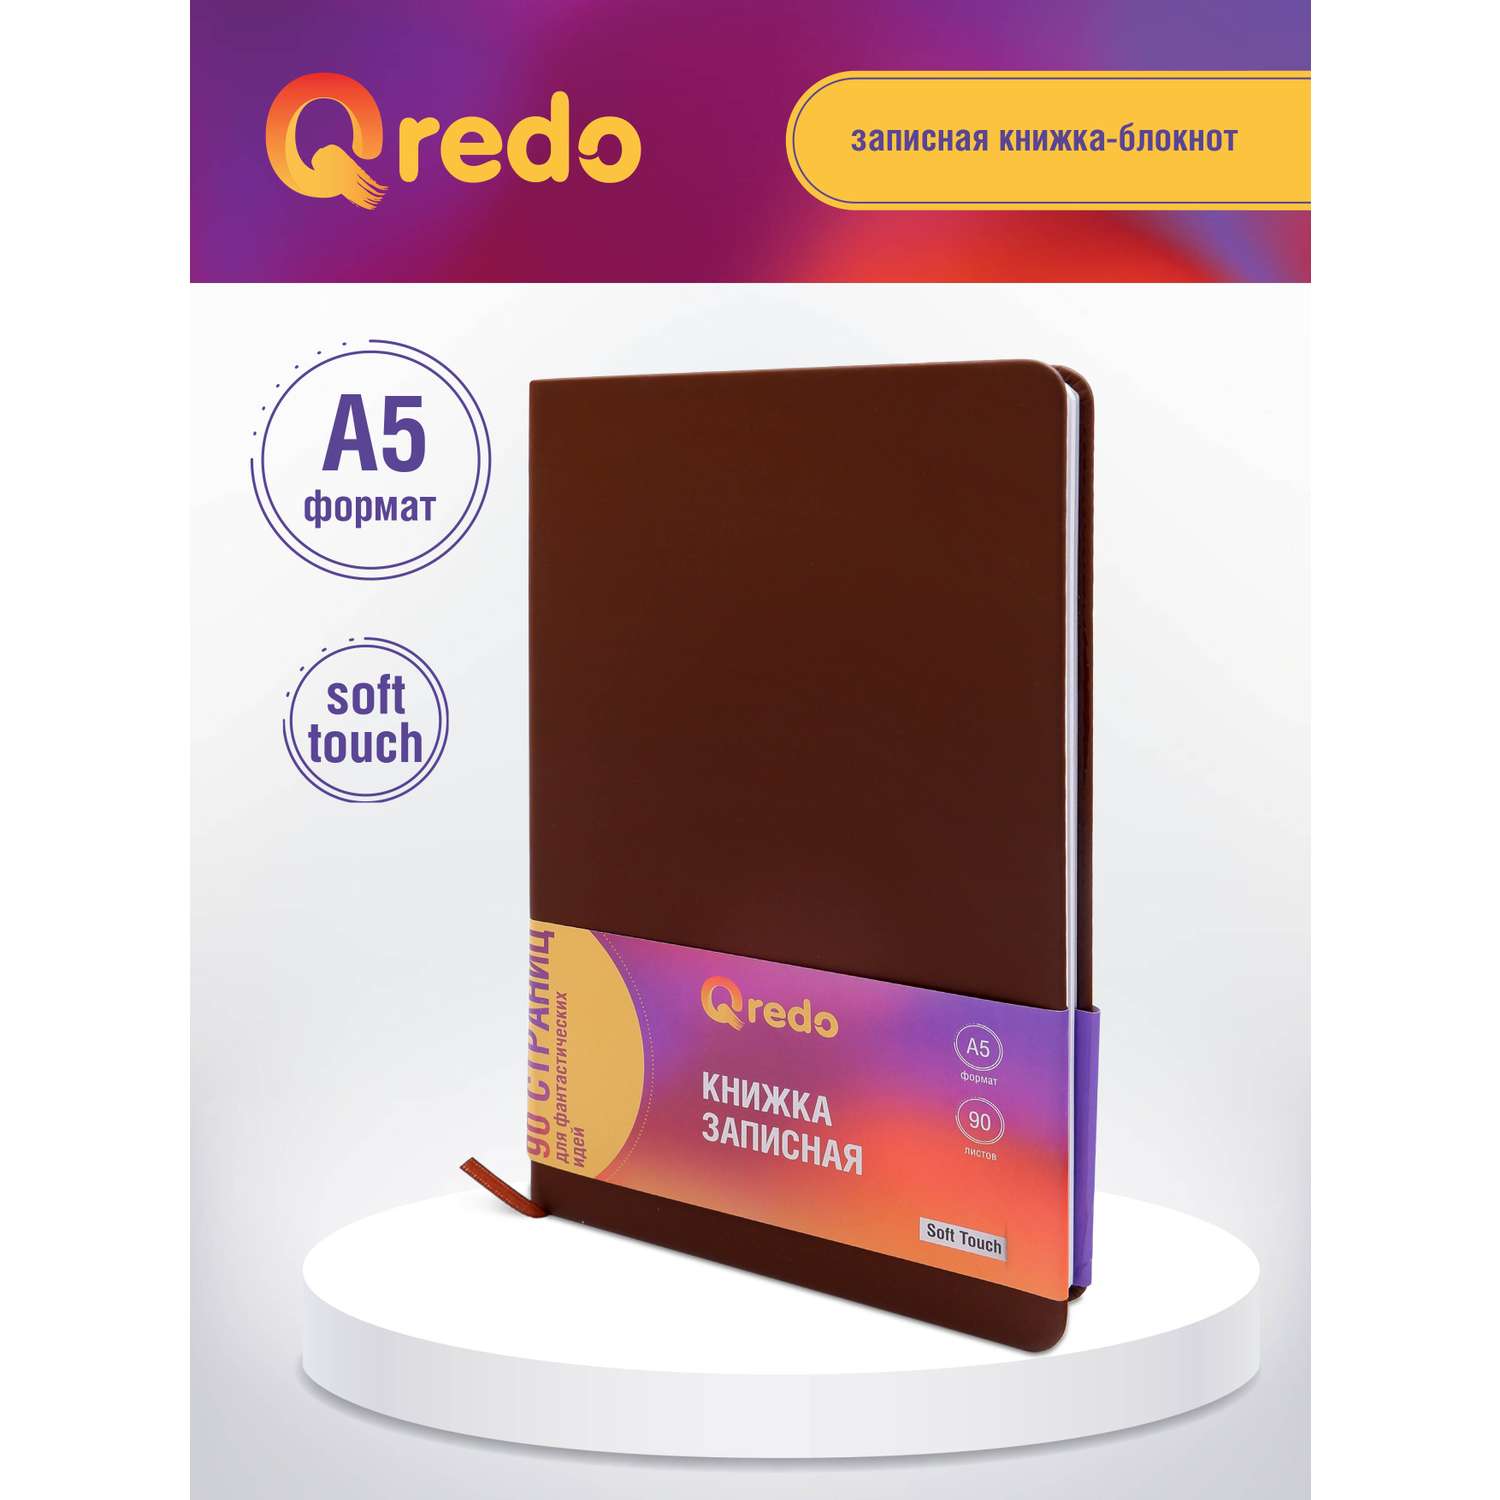 Записная книжка Qredo в клетку А5 90л Qredo коричневая обложка soft touch на резинке - фото 1